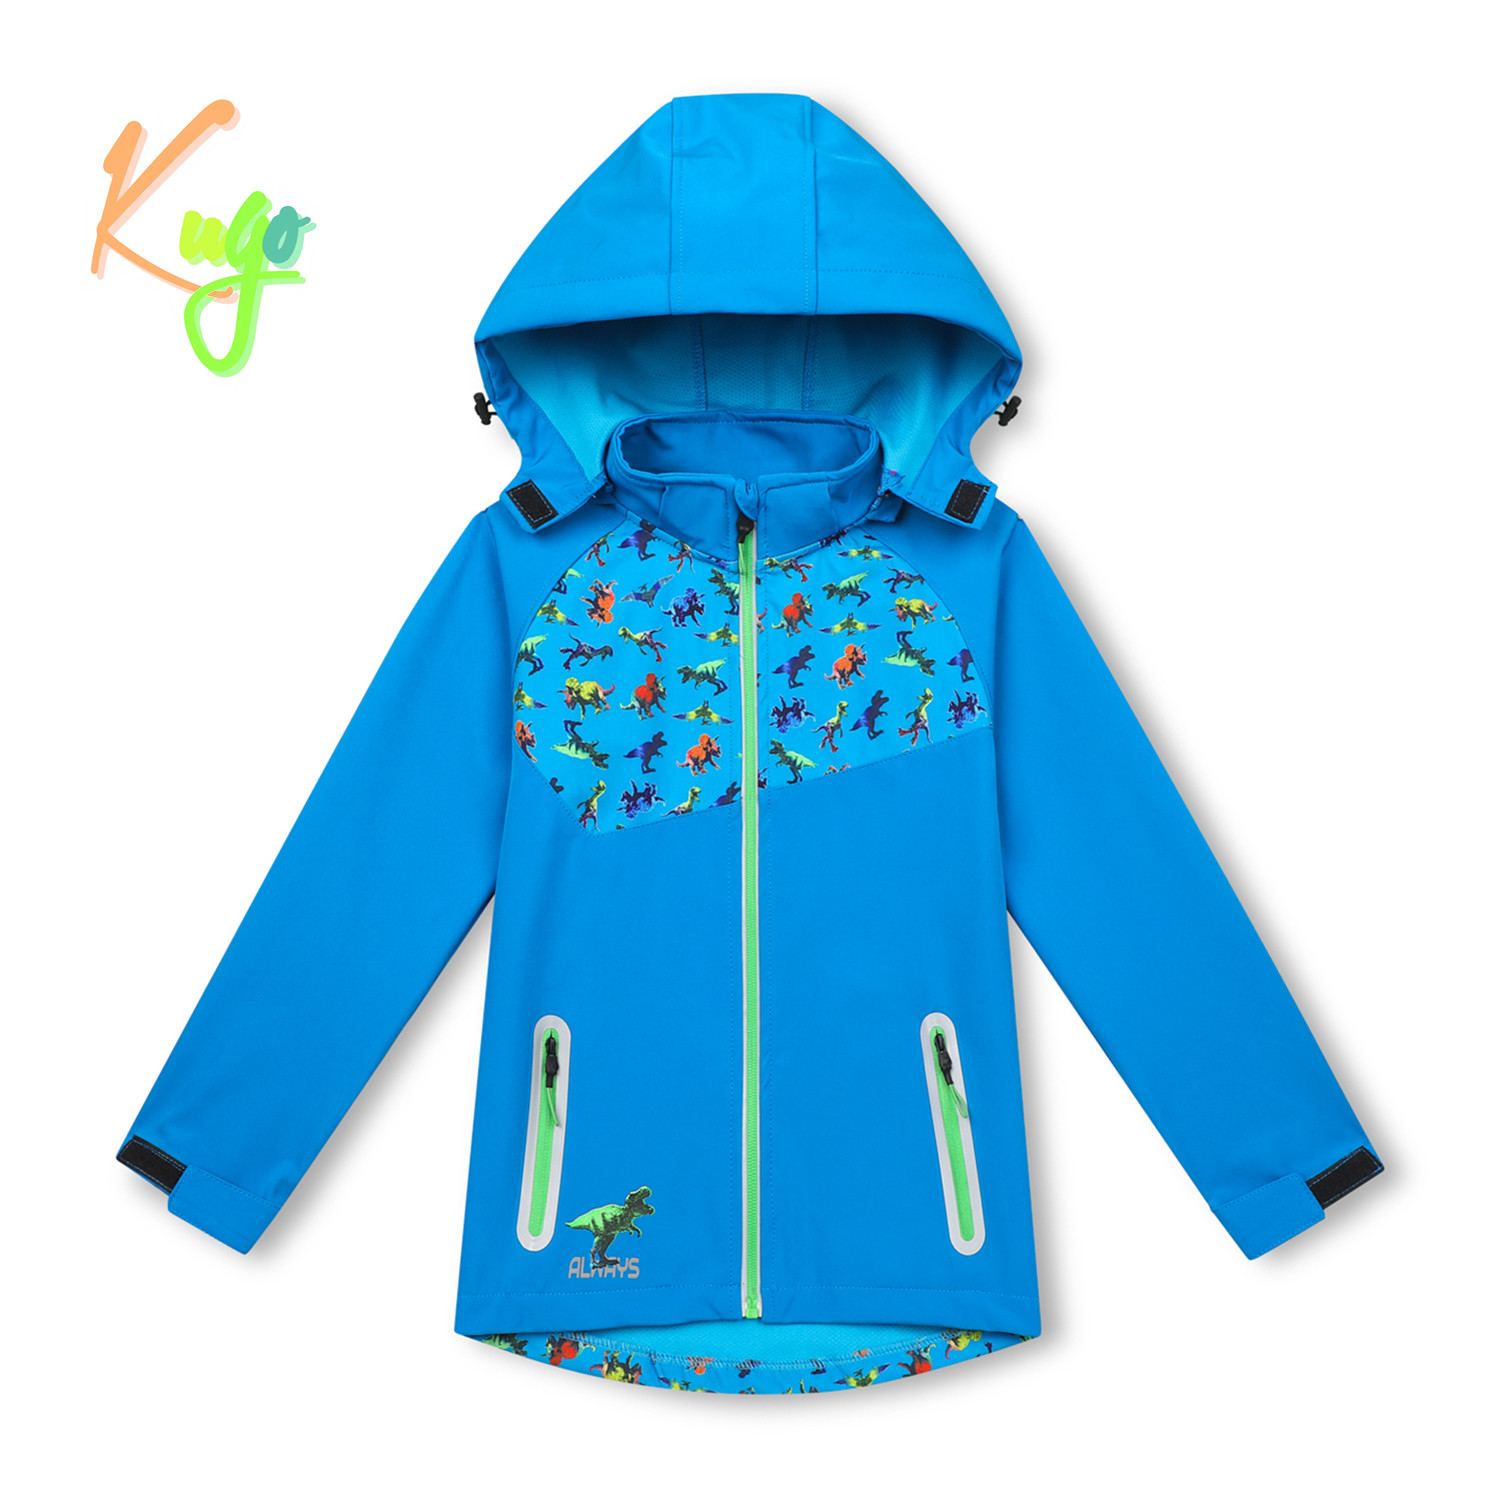 Chlapecká softshellová bunda - KUGO HK3123, modrá Barva: Modrá, Velikost: 98